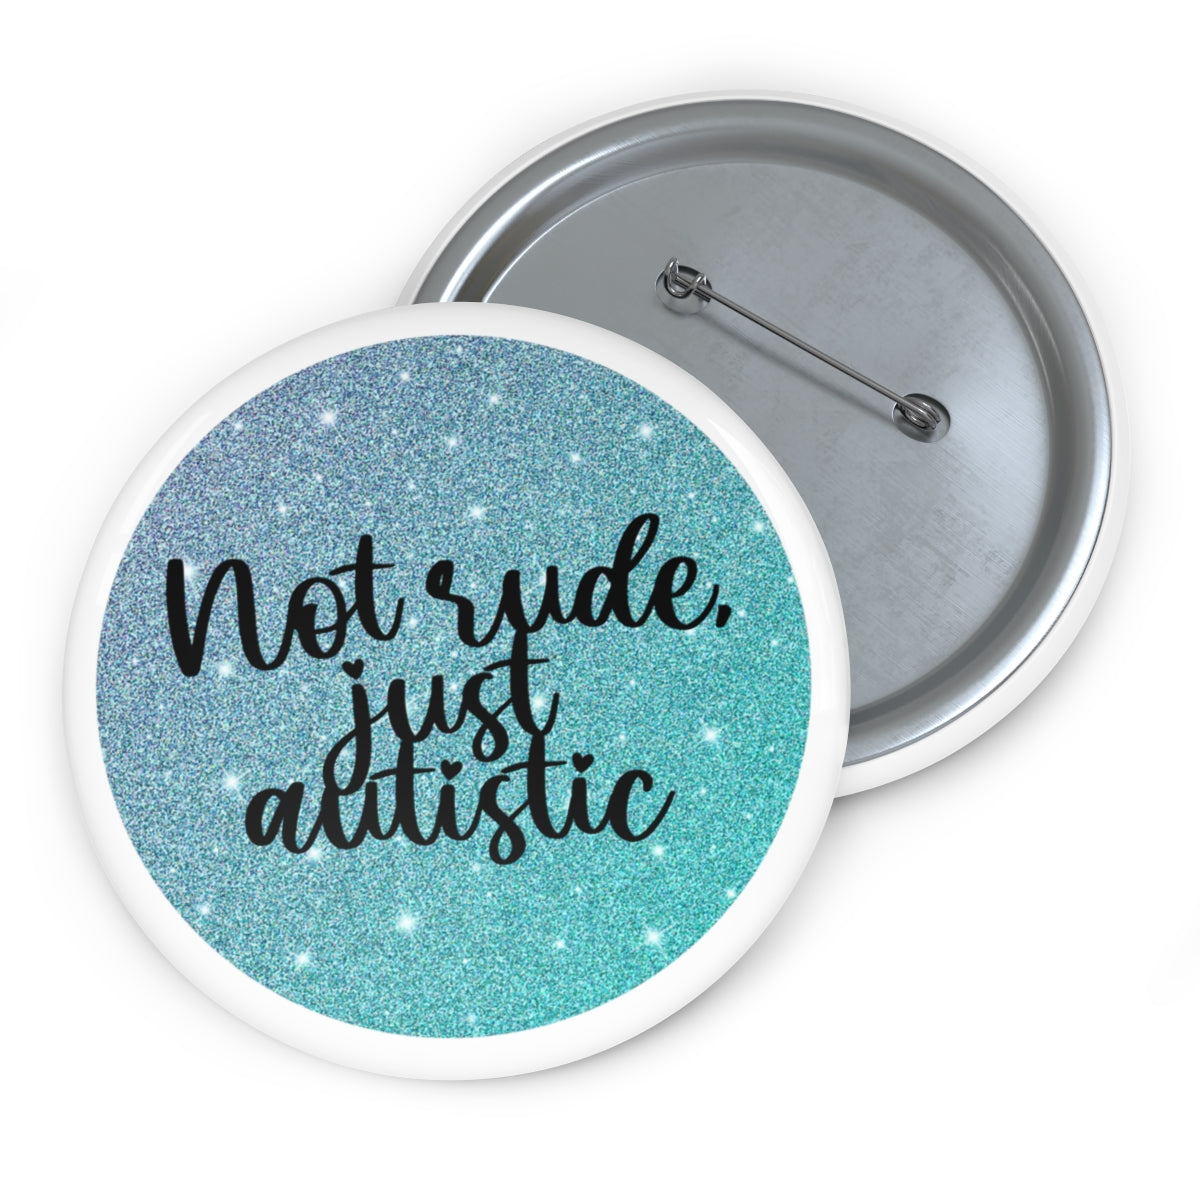 Not Rude, Just Autistic Blue Glitter Button - beyourownherodesign